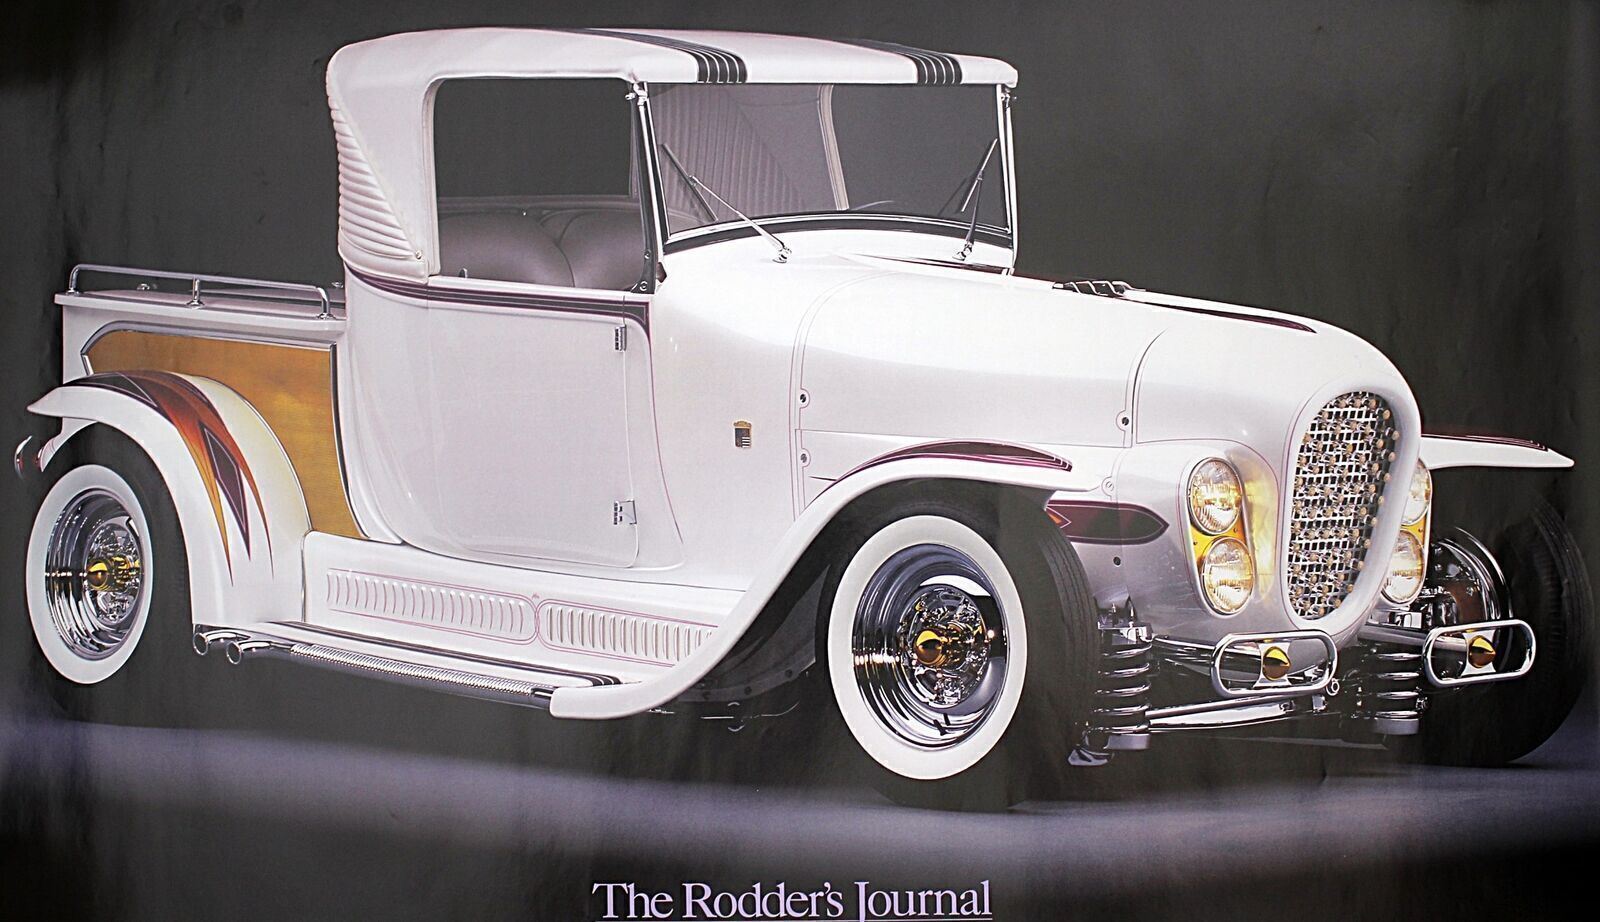 2008 RODDER'S JOURNAL #12 Window Poster Double Sided Ala Kart & Bonneville Flats